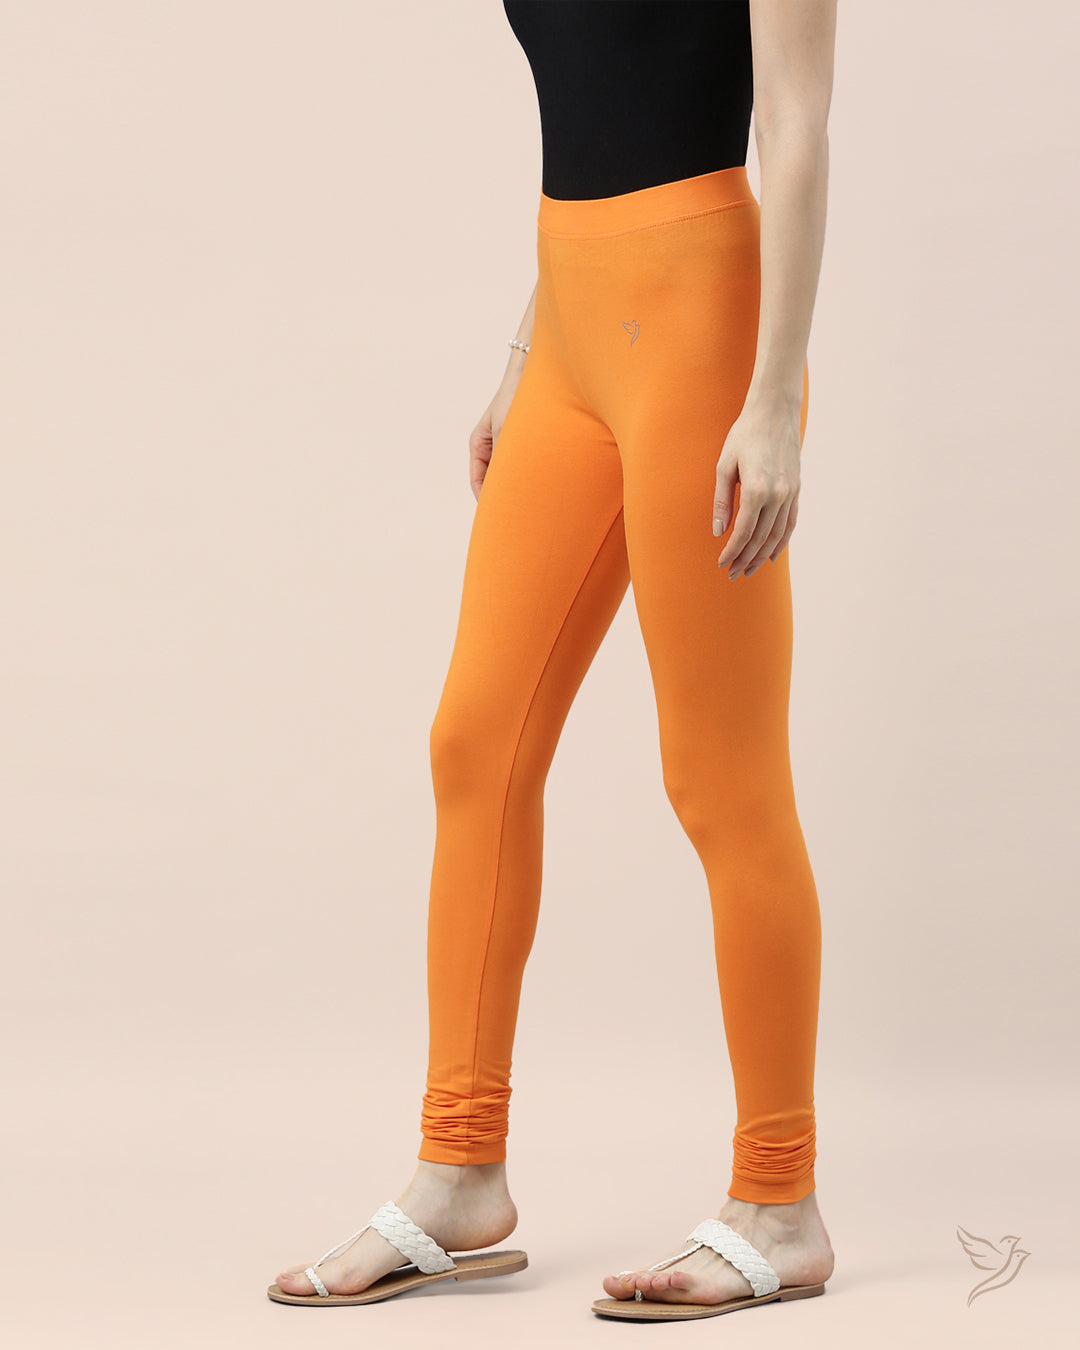 Orange Tango Cotton Churidar Legging for Women